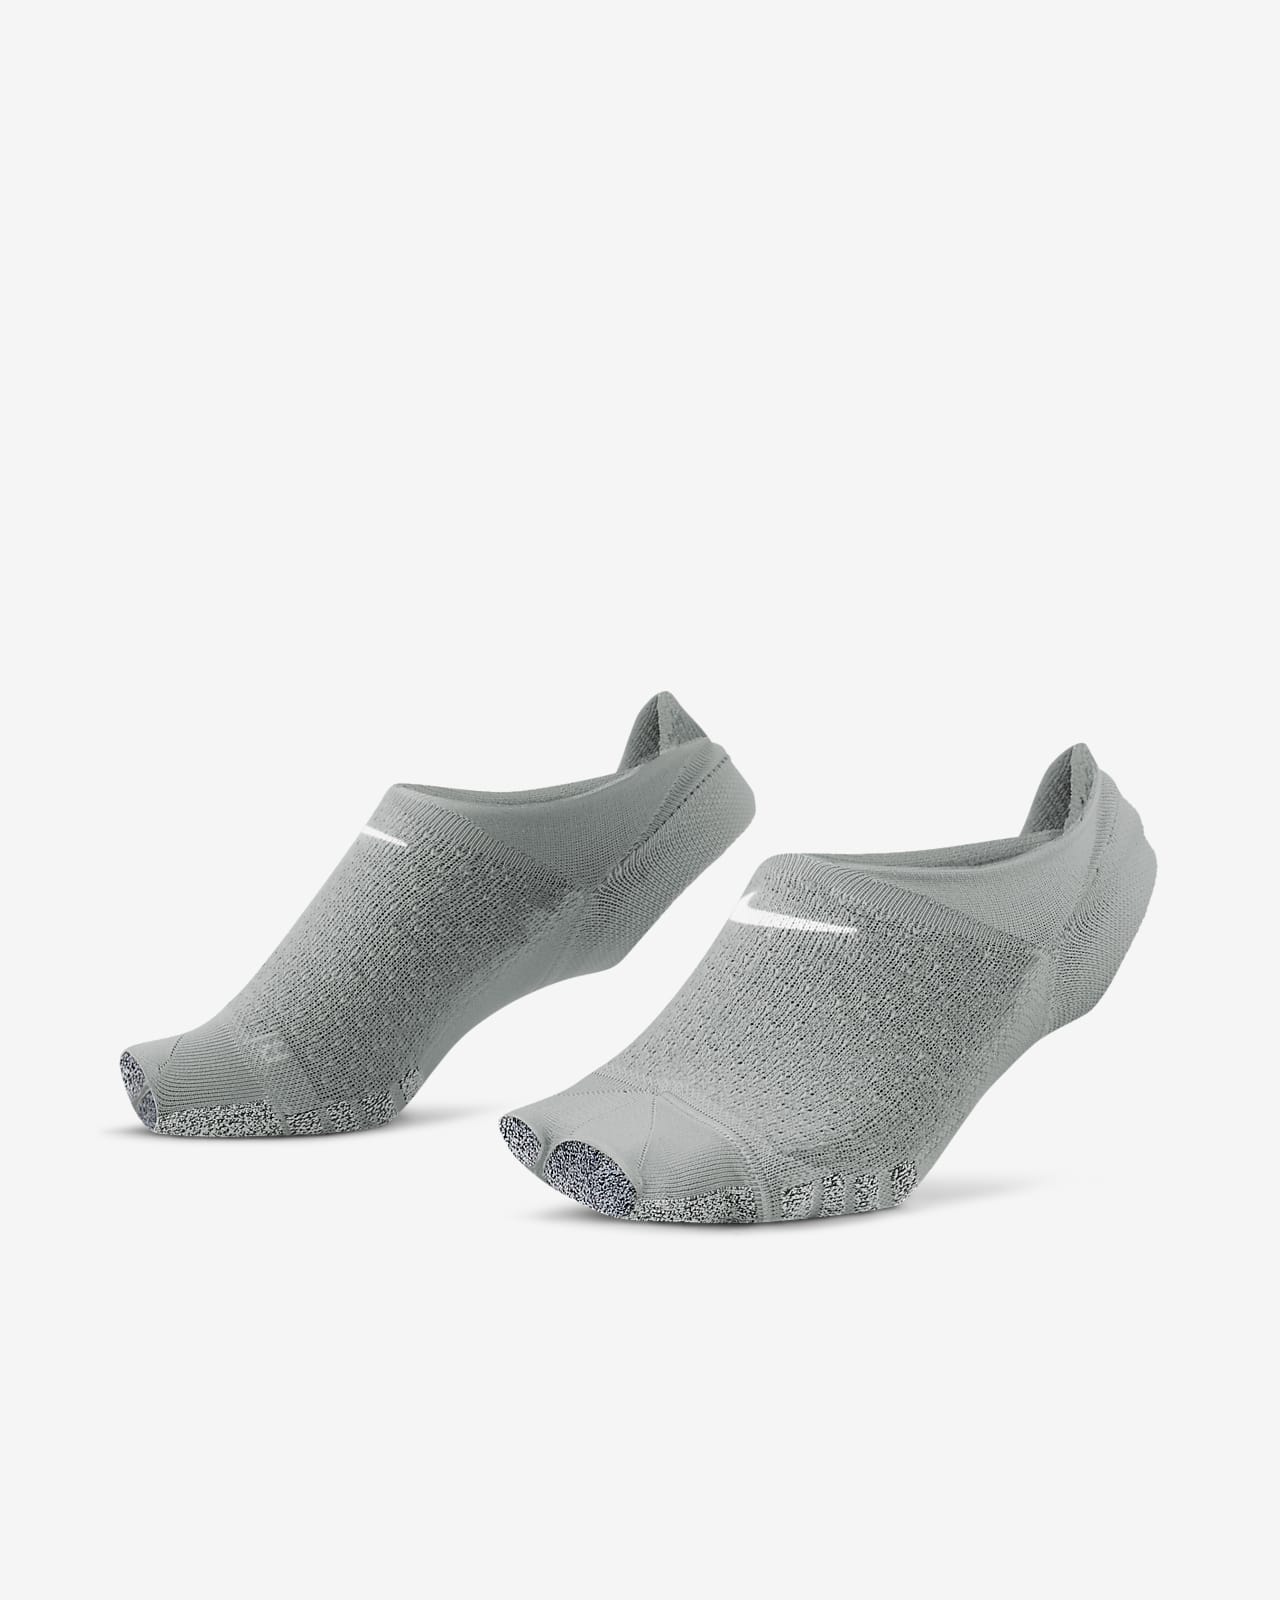 Breathe Grip Socks - Pink  Grip socks, Pilates socks, Designer socks